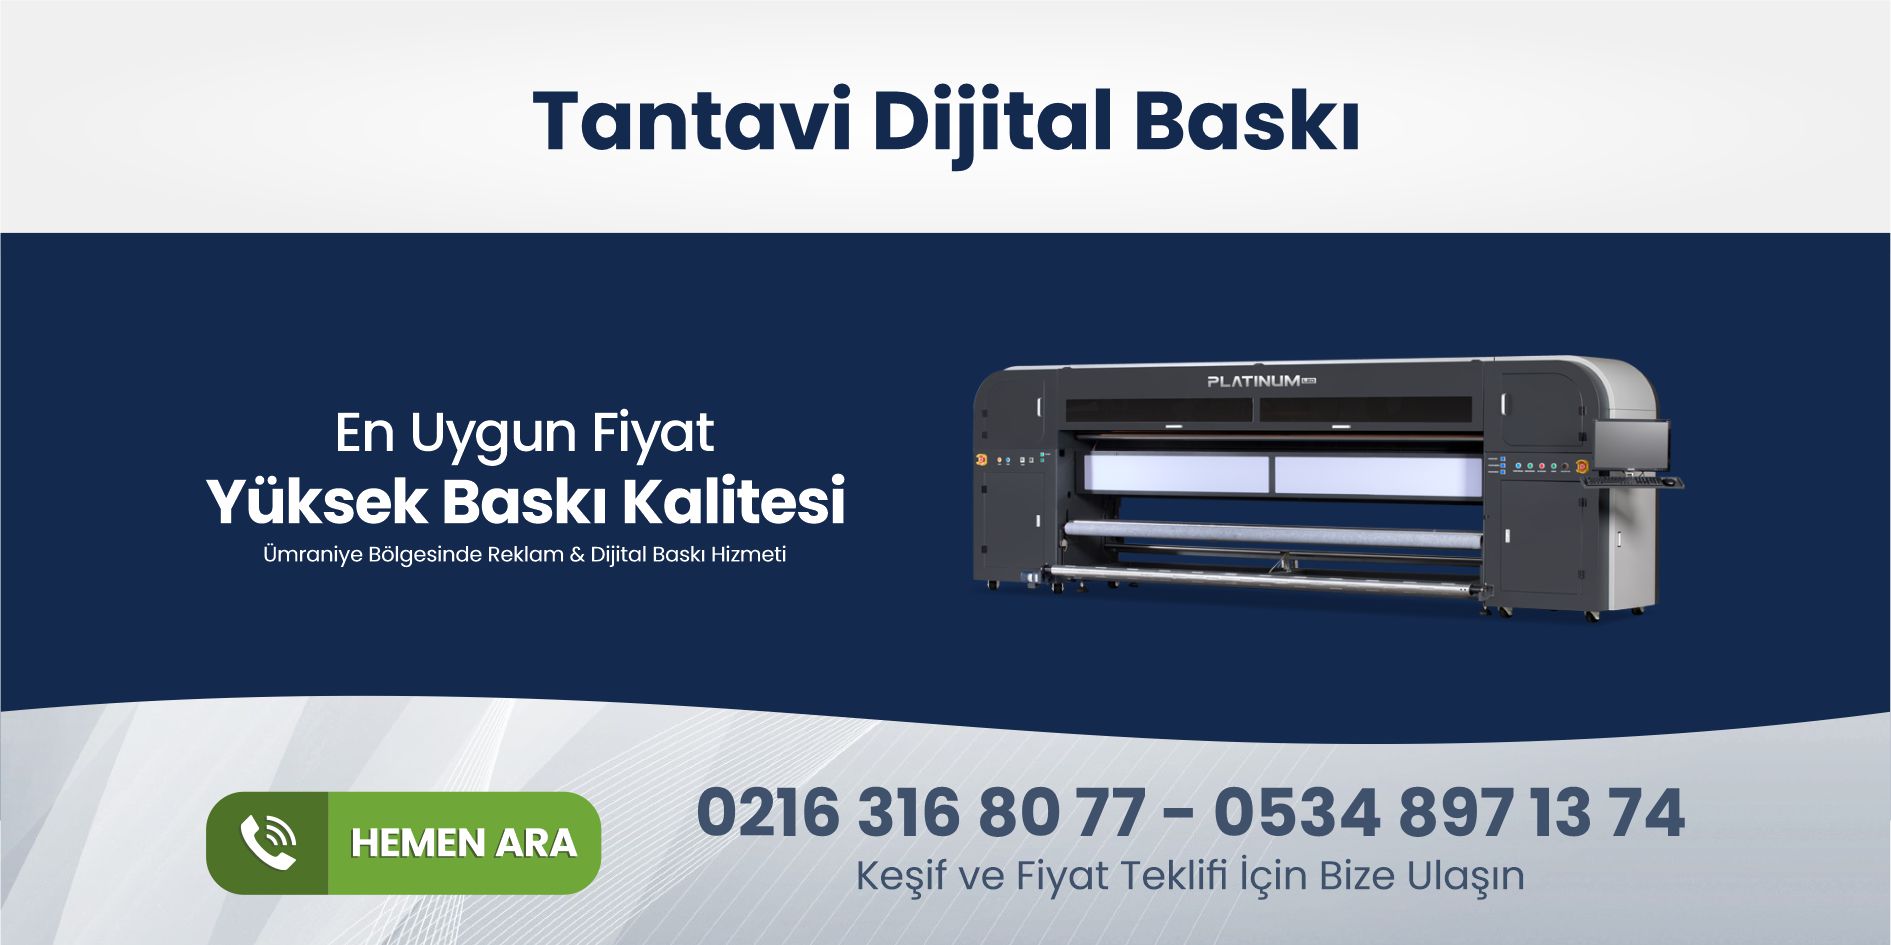 You are currently viewing Tantavi Dijital Baskı